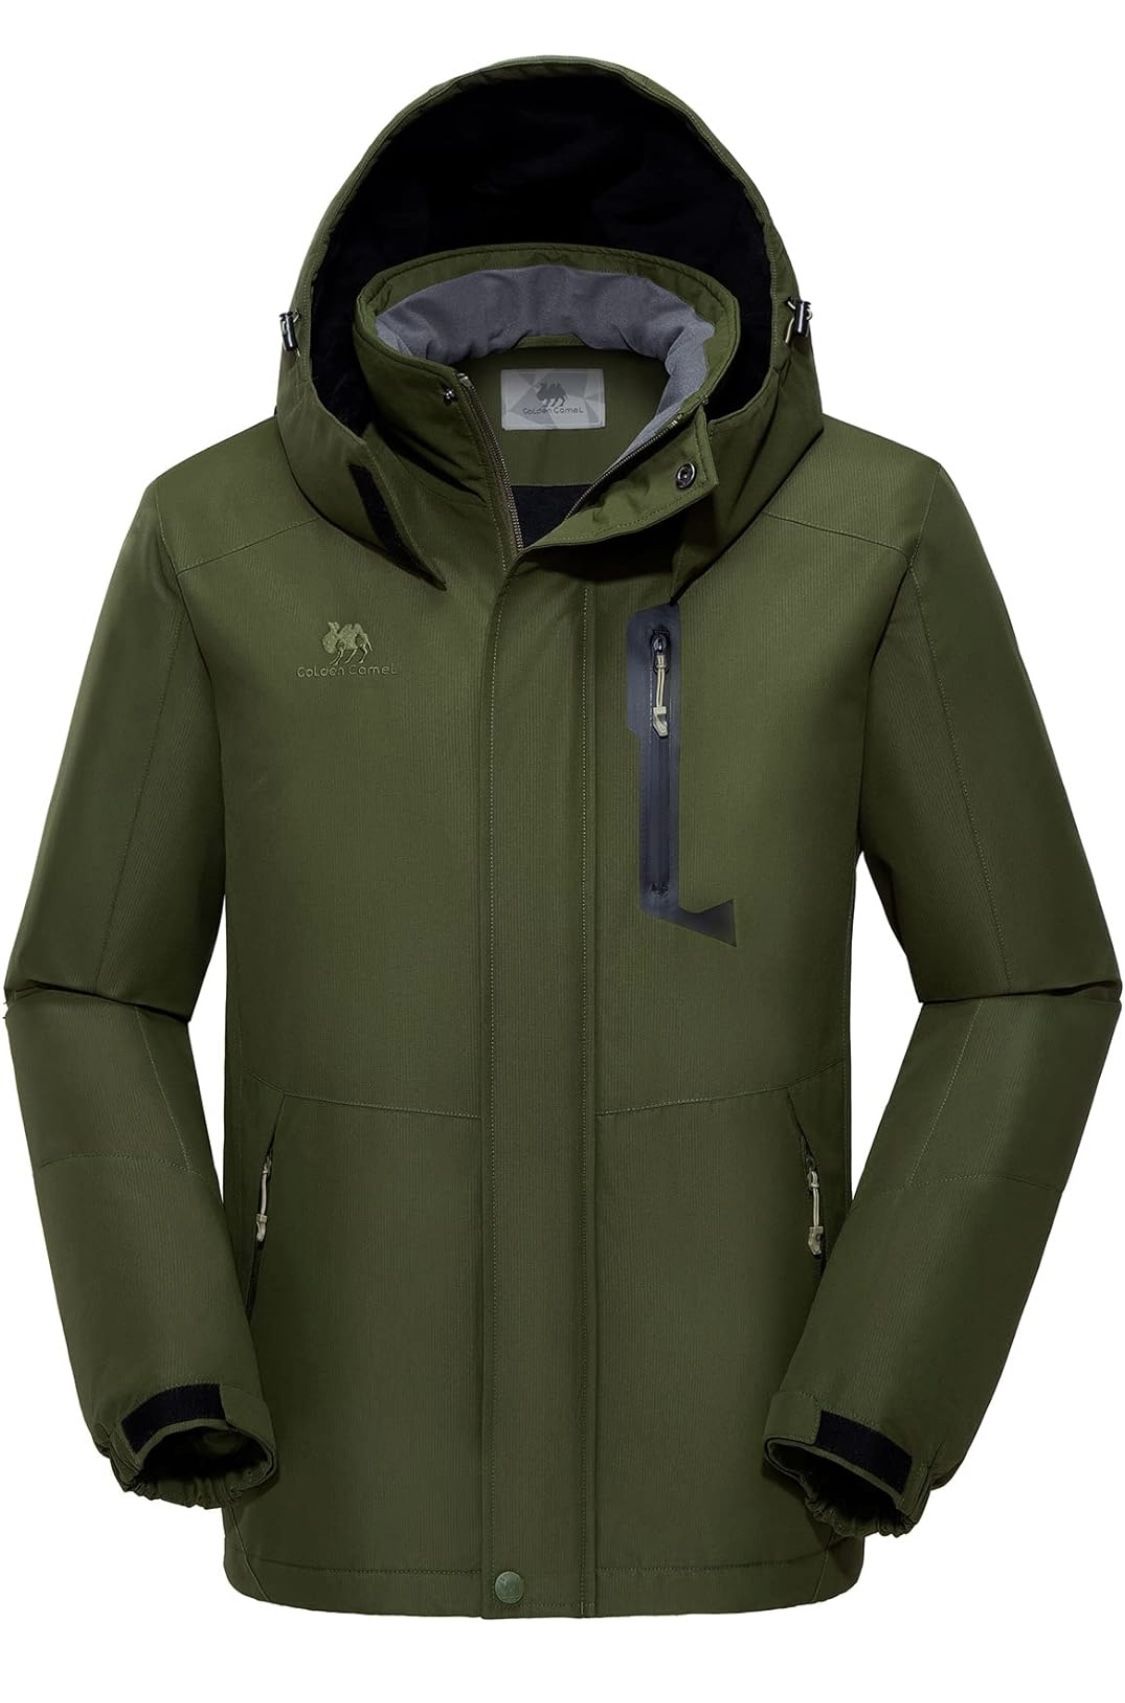 Xxl Men's Winter Jacket Windproof Ski Snow Jacket Waterproof Thicken Parka Rain Jacket Warm Puffer Coat